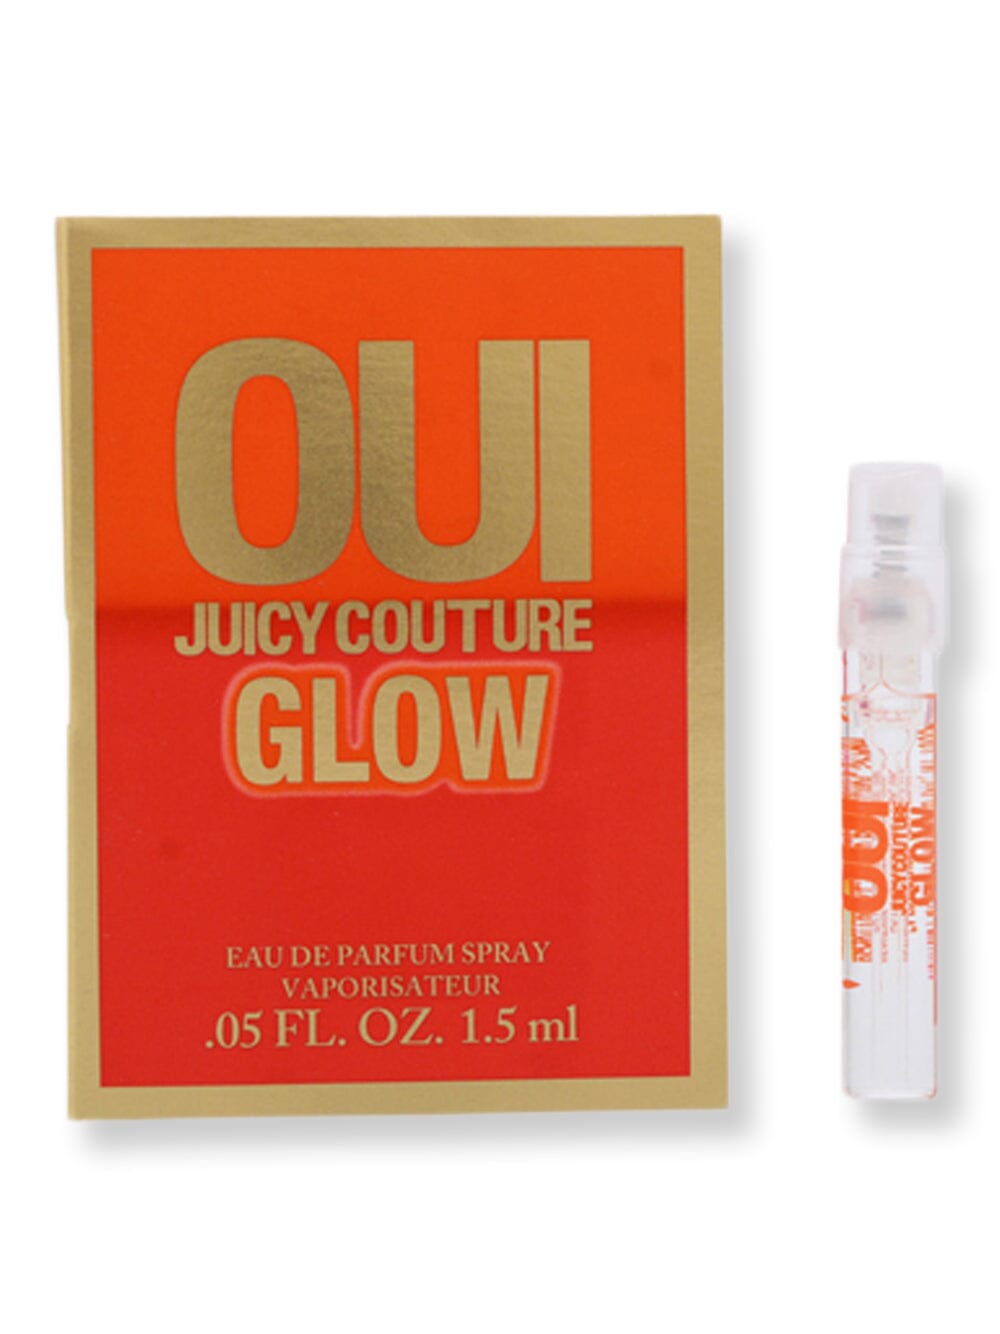 Juicy Couture Juicy Couture Oui Glow EDP Spray 0.05 oz1.5 ml Perfume 